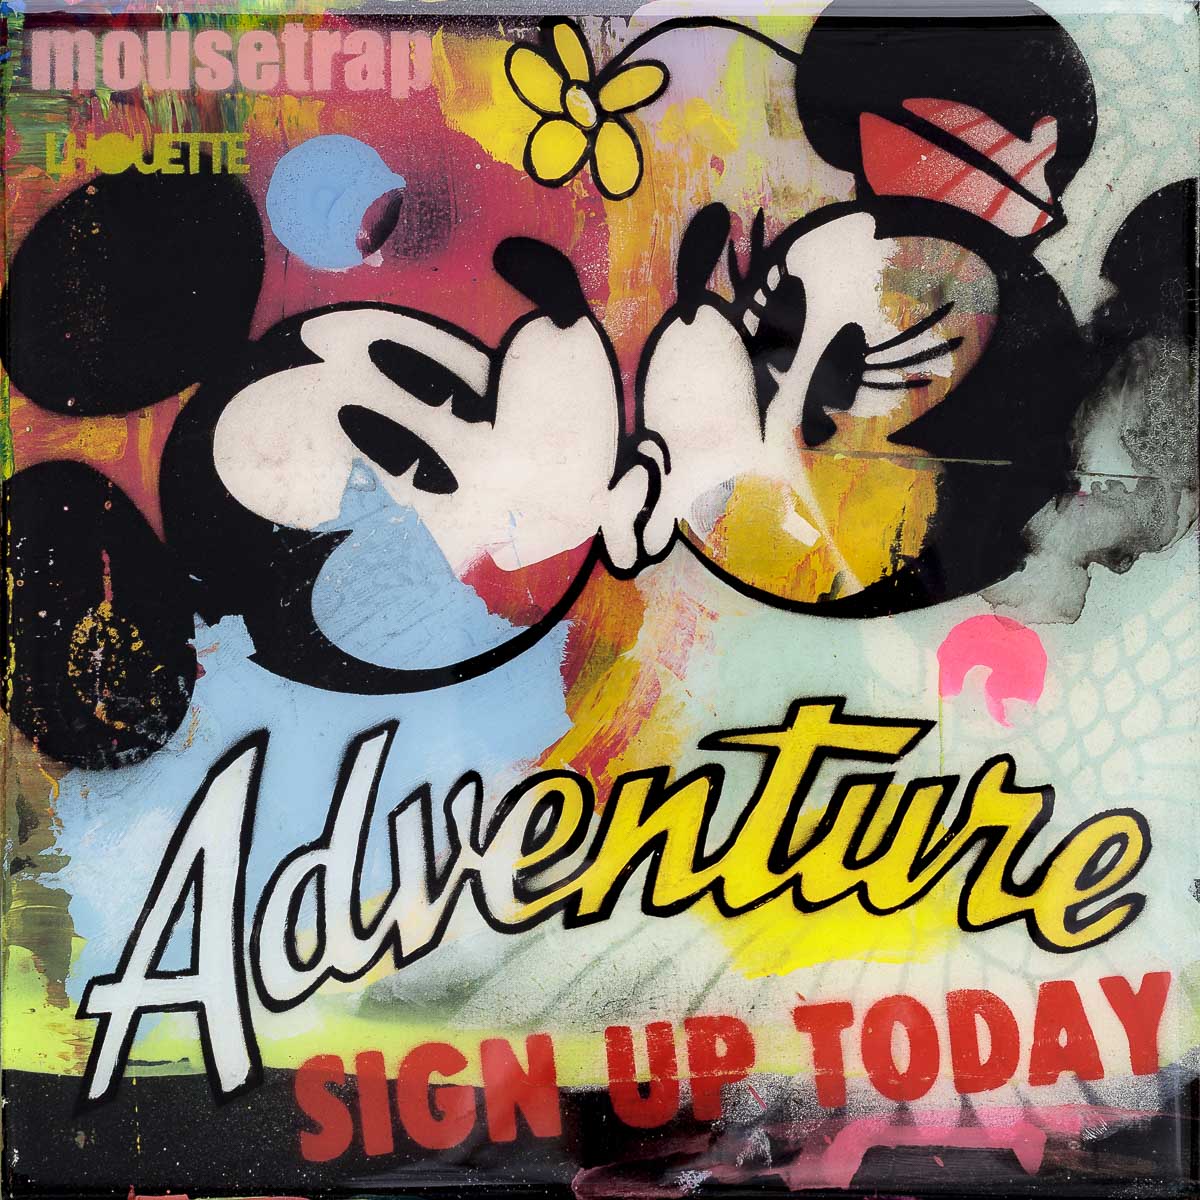 Mousetrap - Miniature Pop Panel - Original Lhouette Original